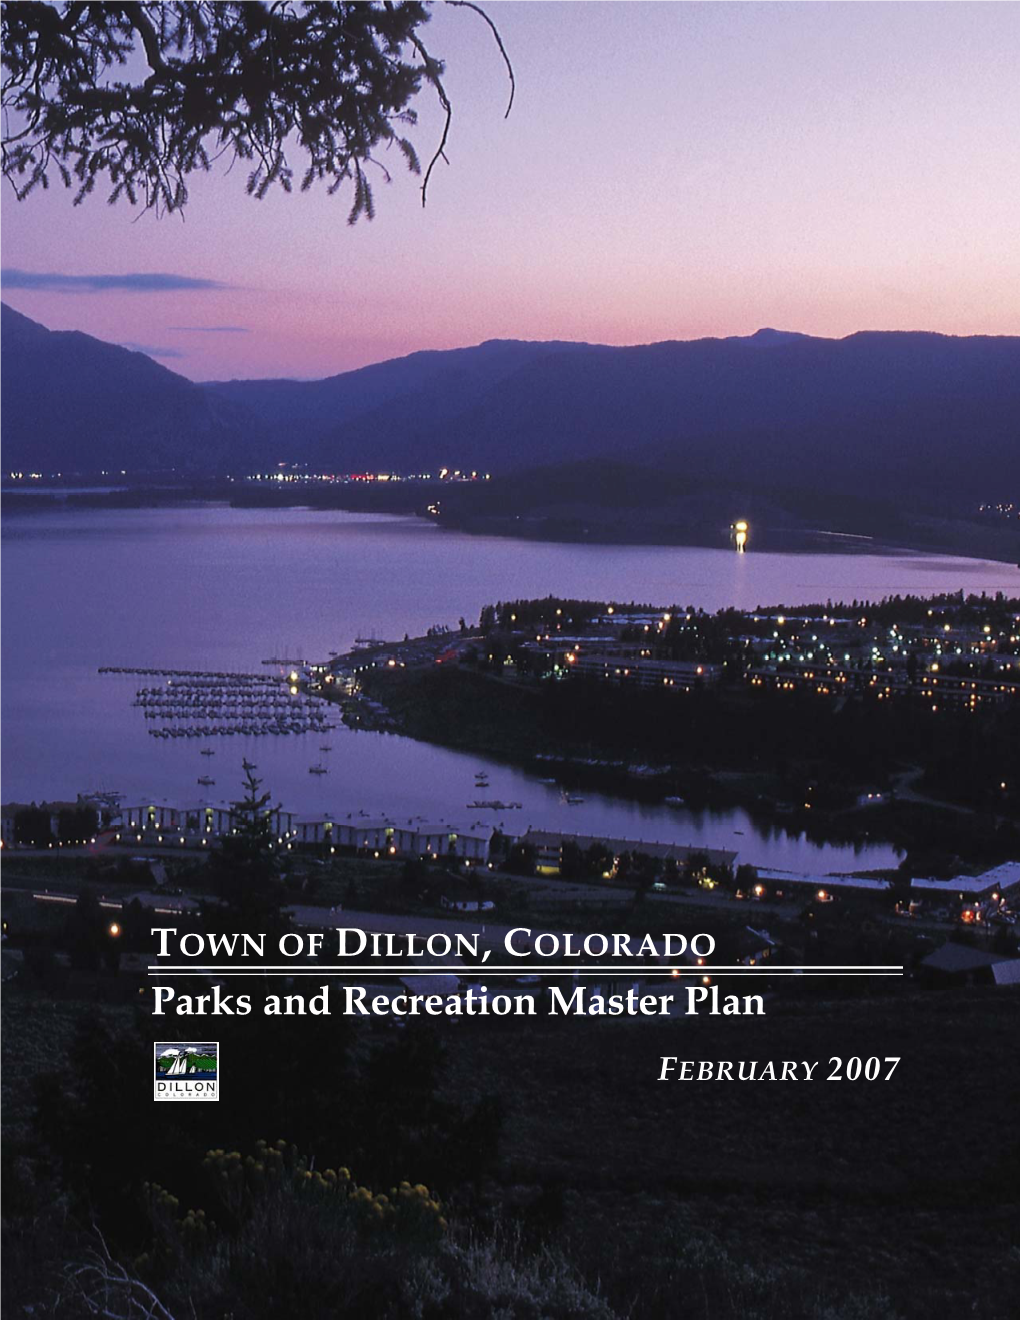 TOWN of DILLON, COLORADO Parks and Recreation Master Plan